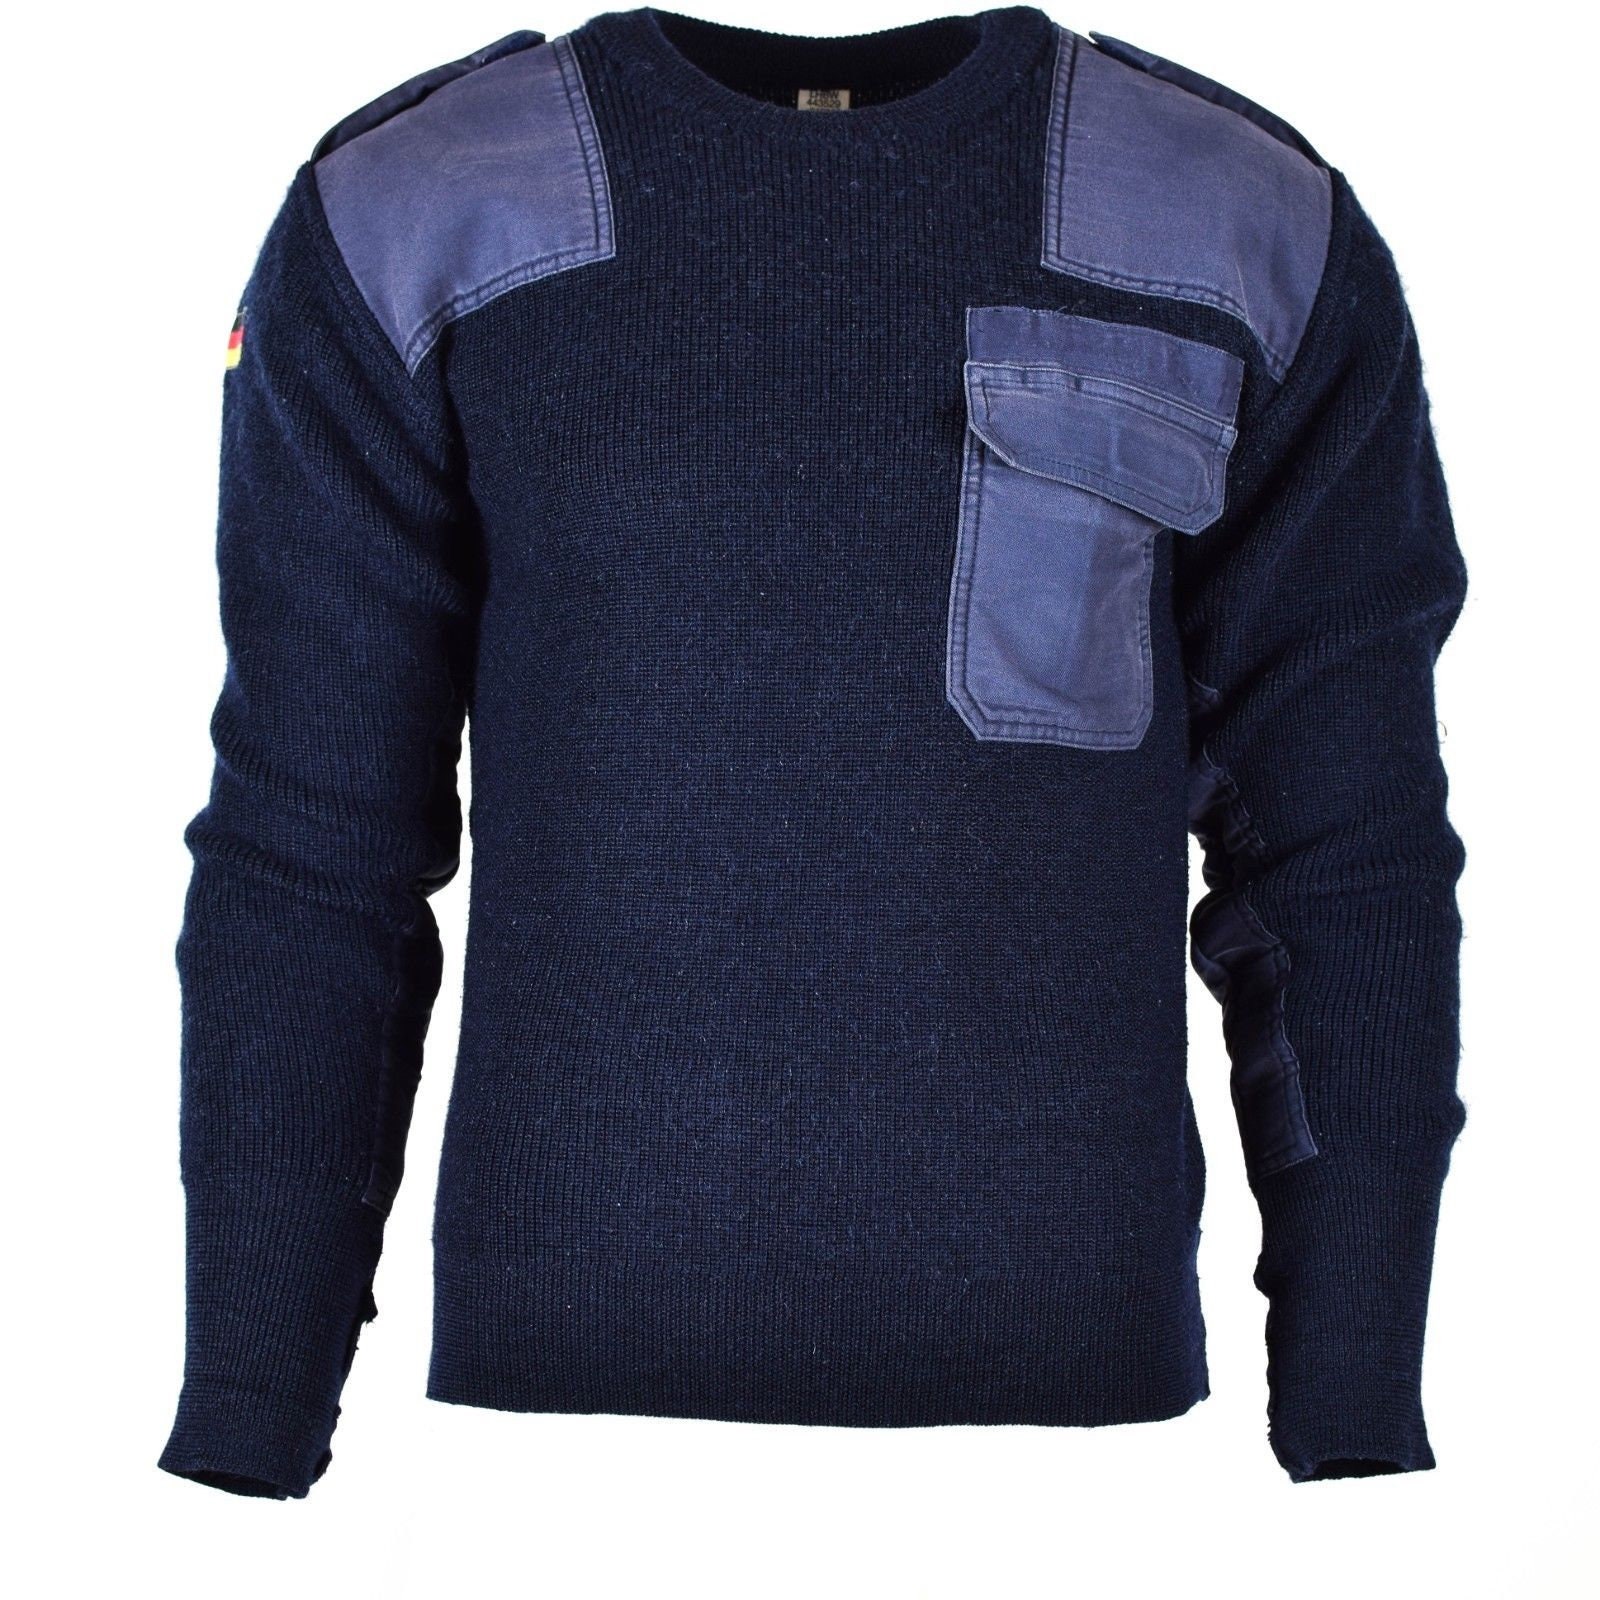 New German army olive wool jumper pullover sweatshirt military sweater khaki 